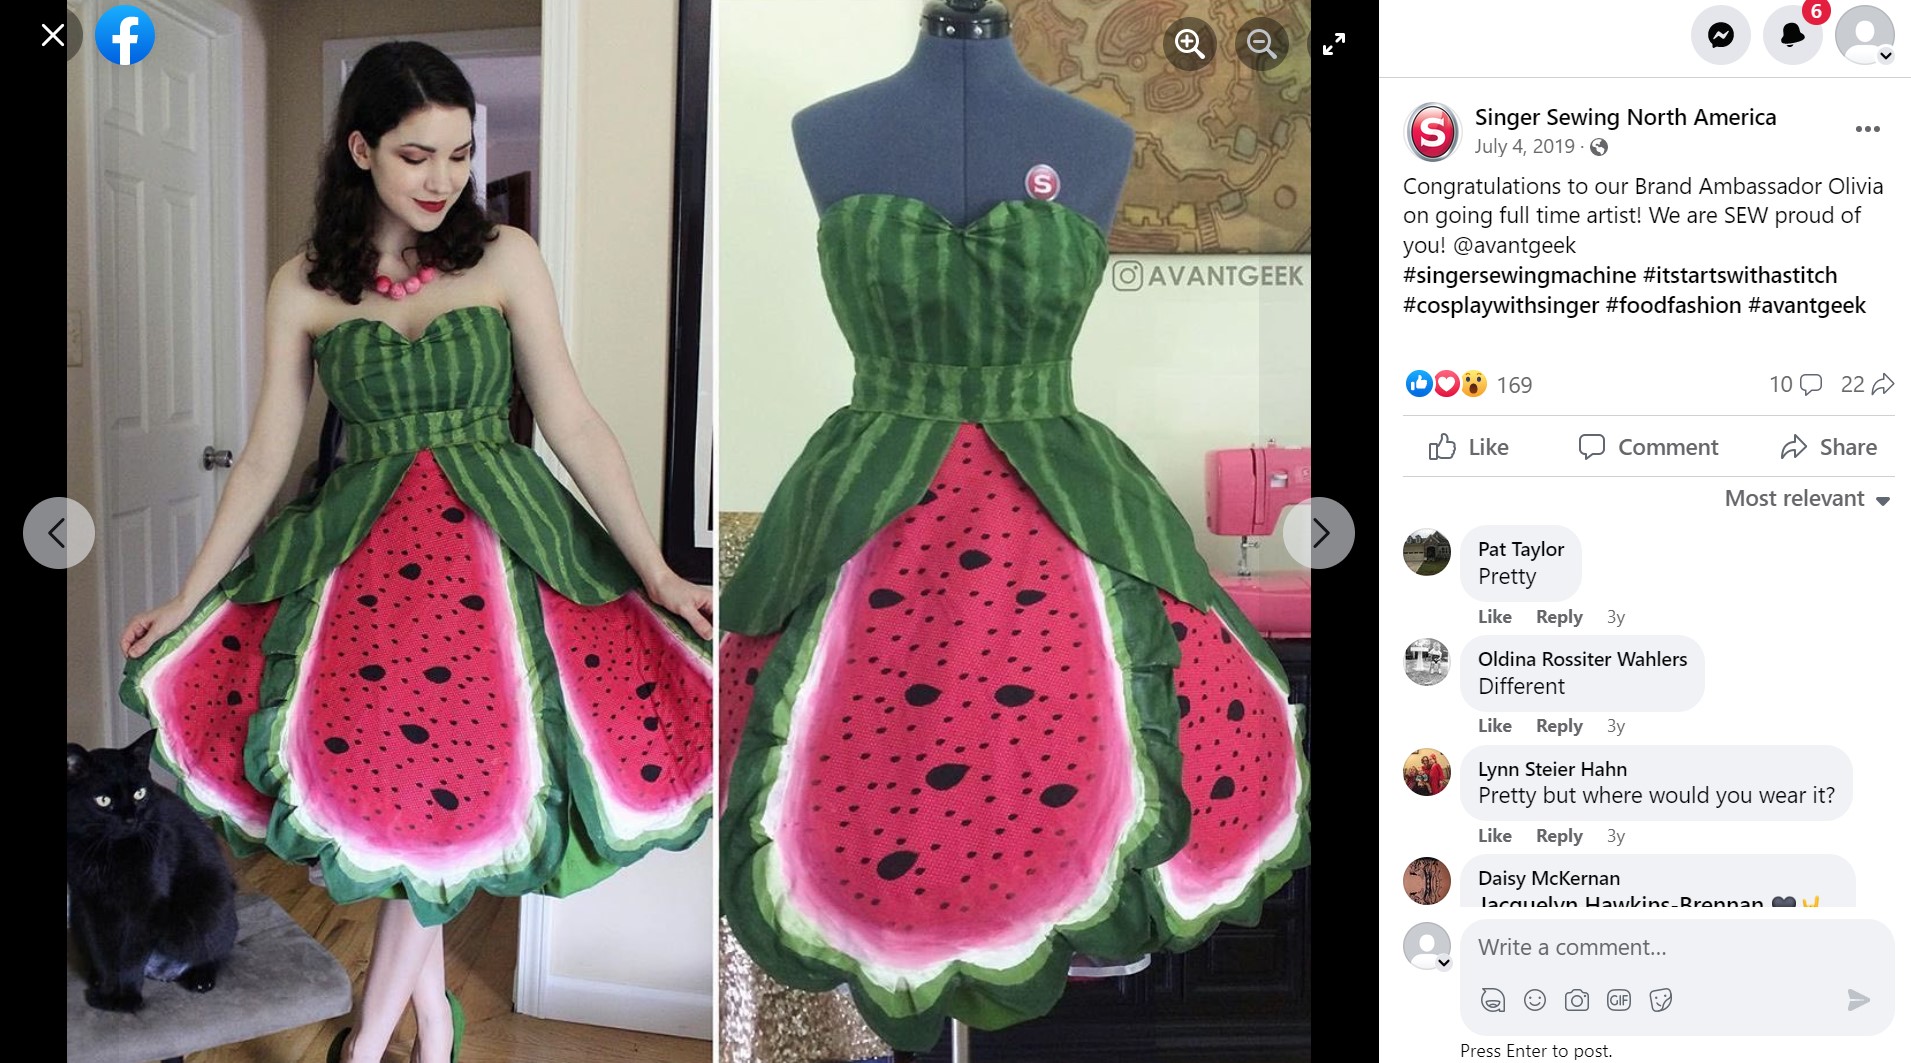 Facebook Marketing — Singer Sewing Company using brand ambassadors like Olivia to woo young adults.